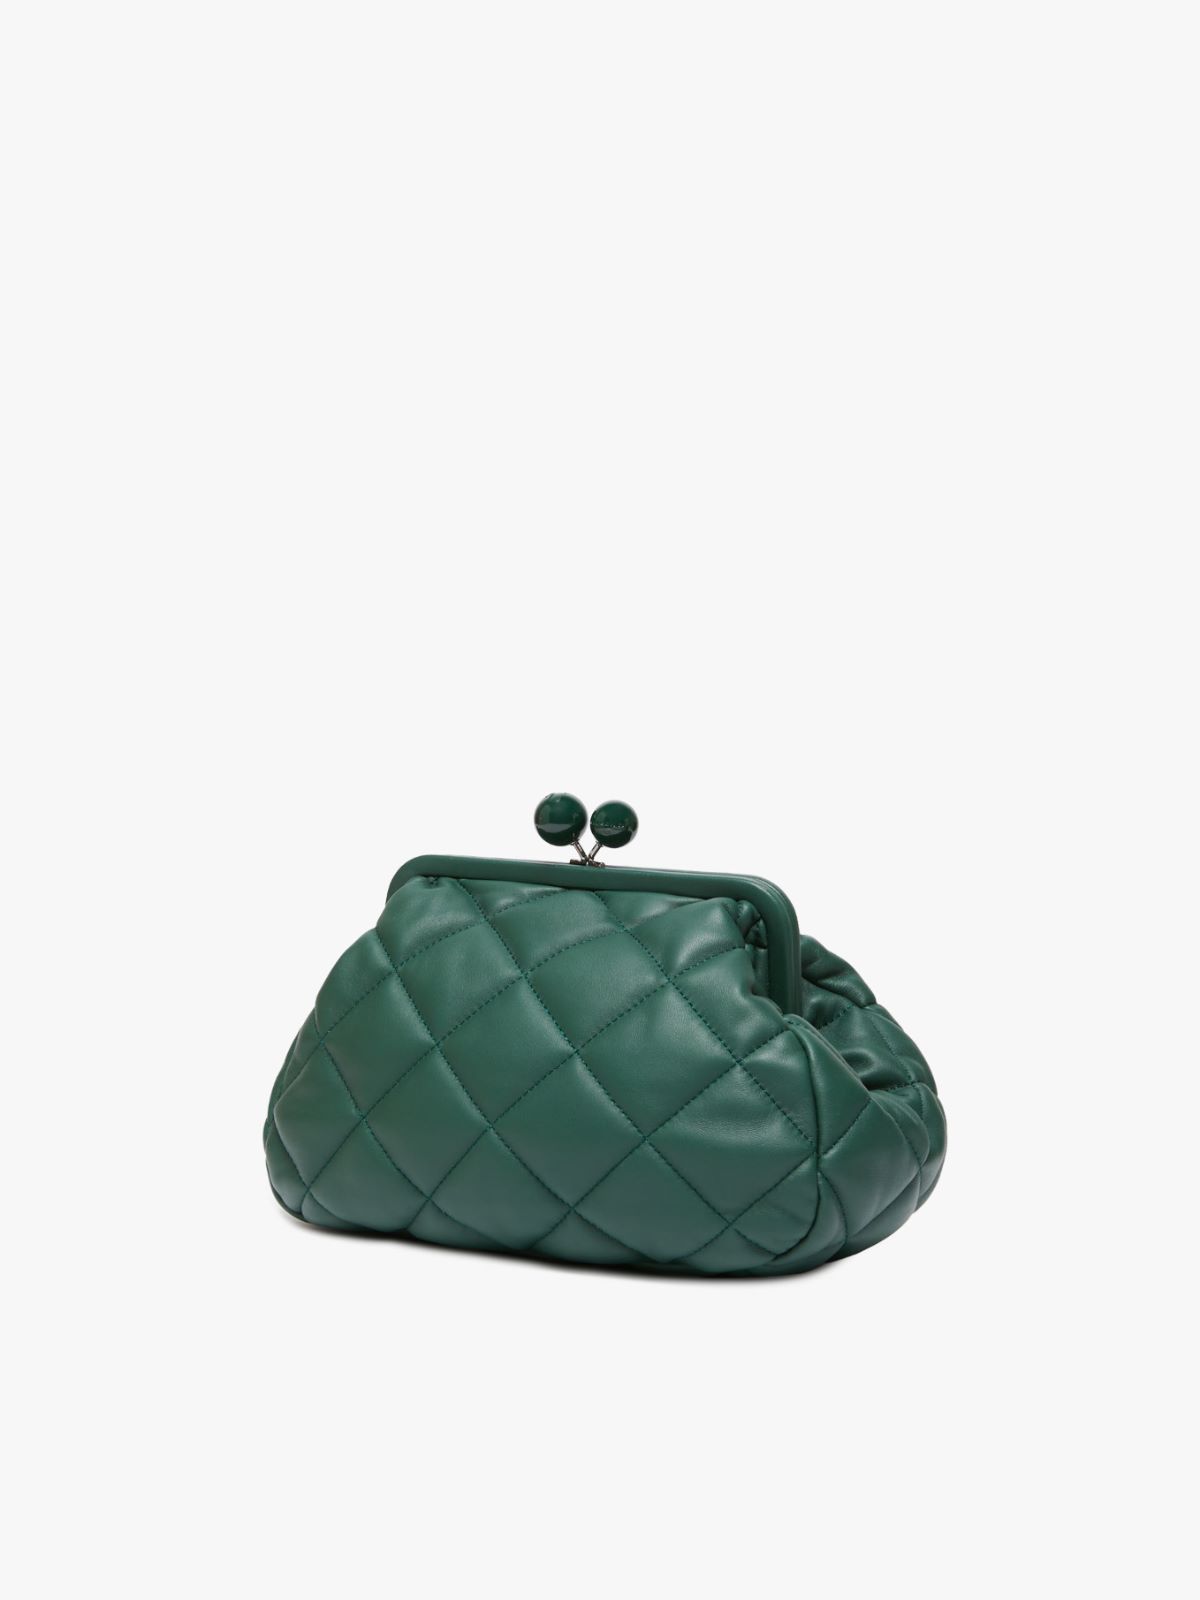 Medium Pasticcino Bag in nappa leather - DARK GREEN - Weekend Max Mara - 2